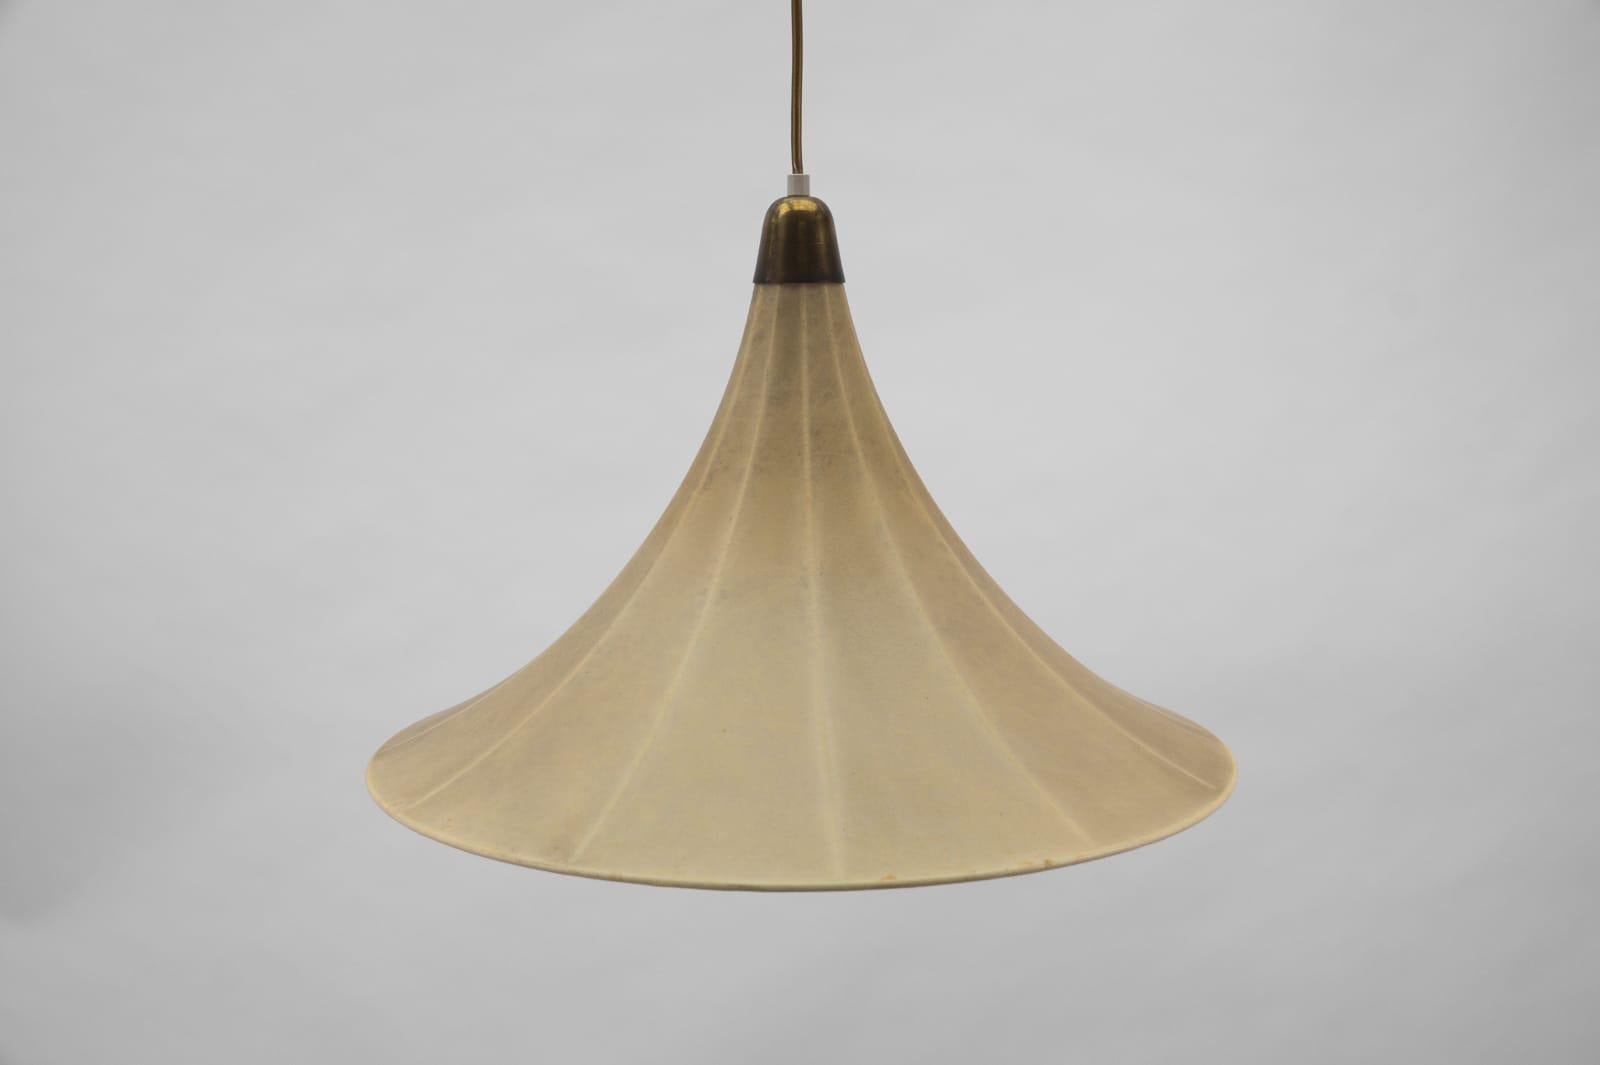 Metal Tulip Cocoon Hanging Lamp by Münchener Werkstätten, 1950s, Germany